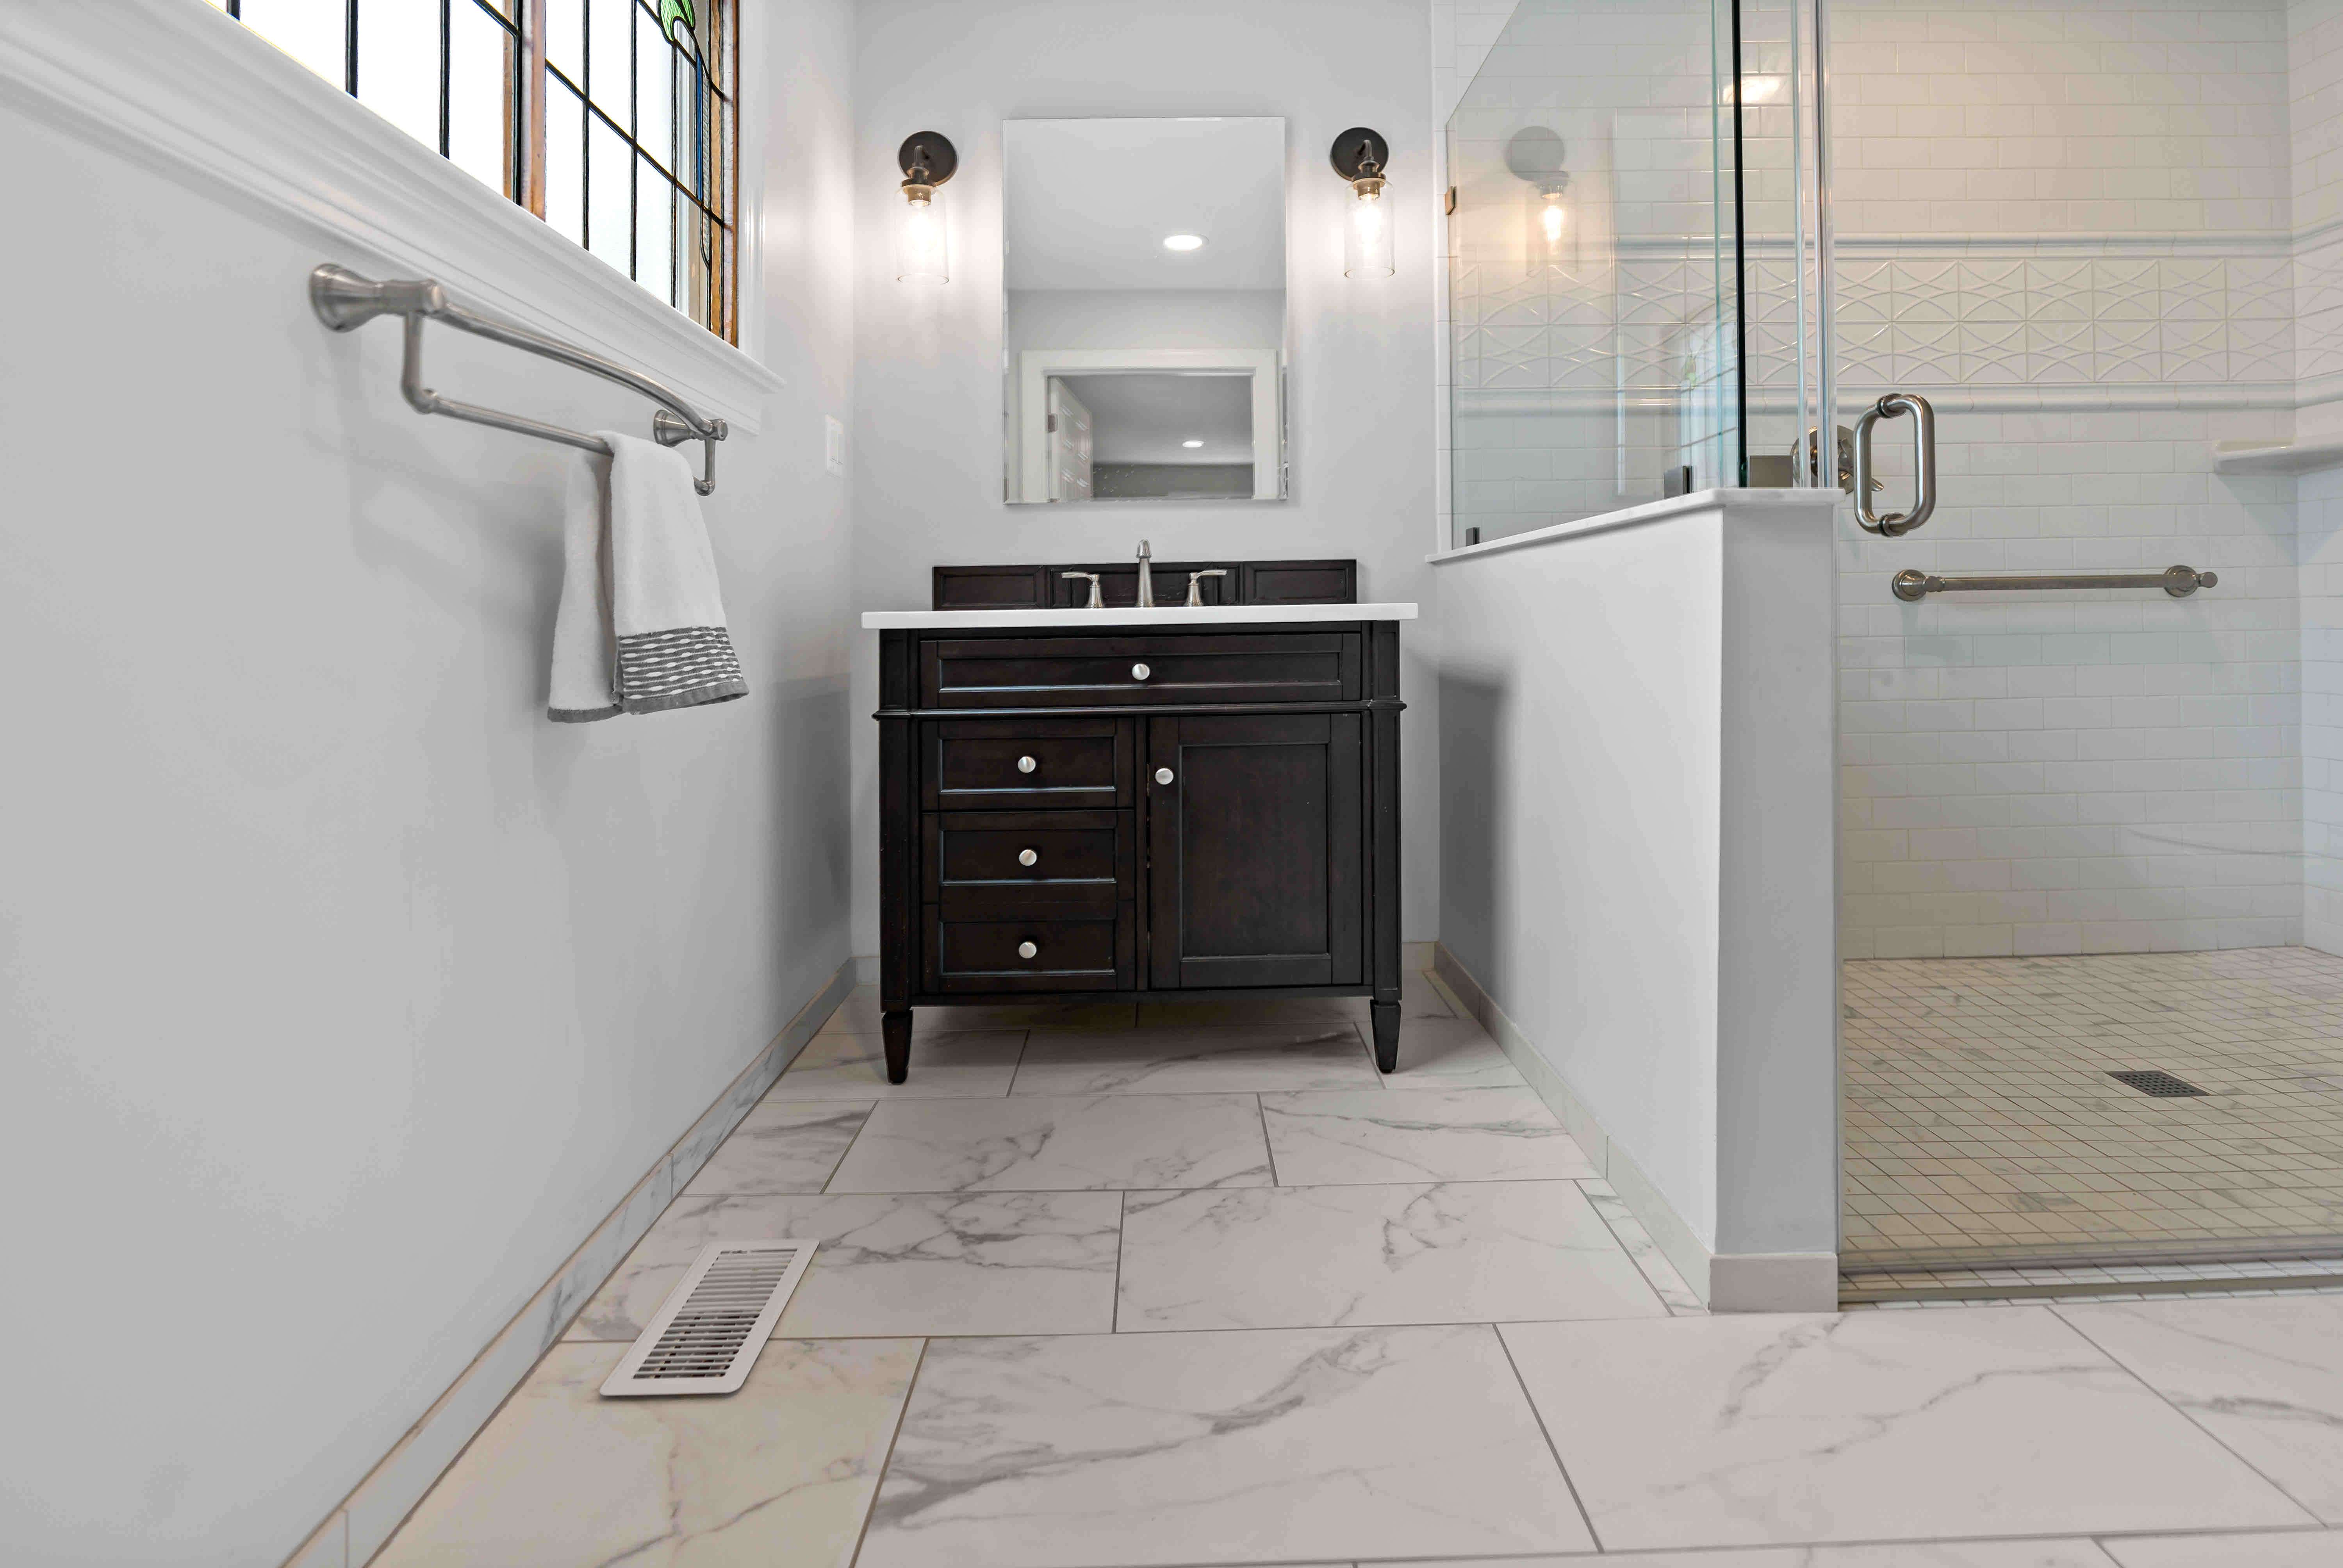 Marble tile floor in full master bathroom